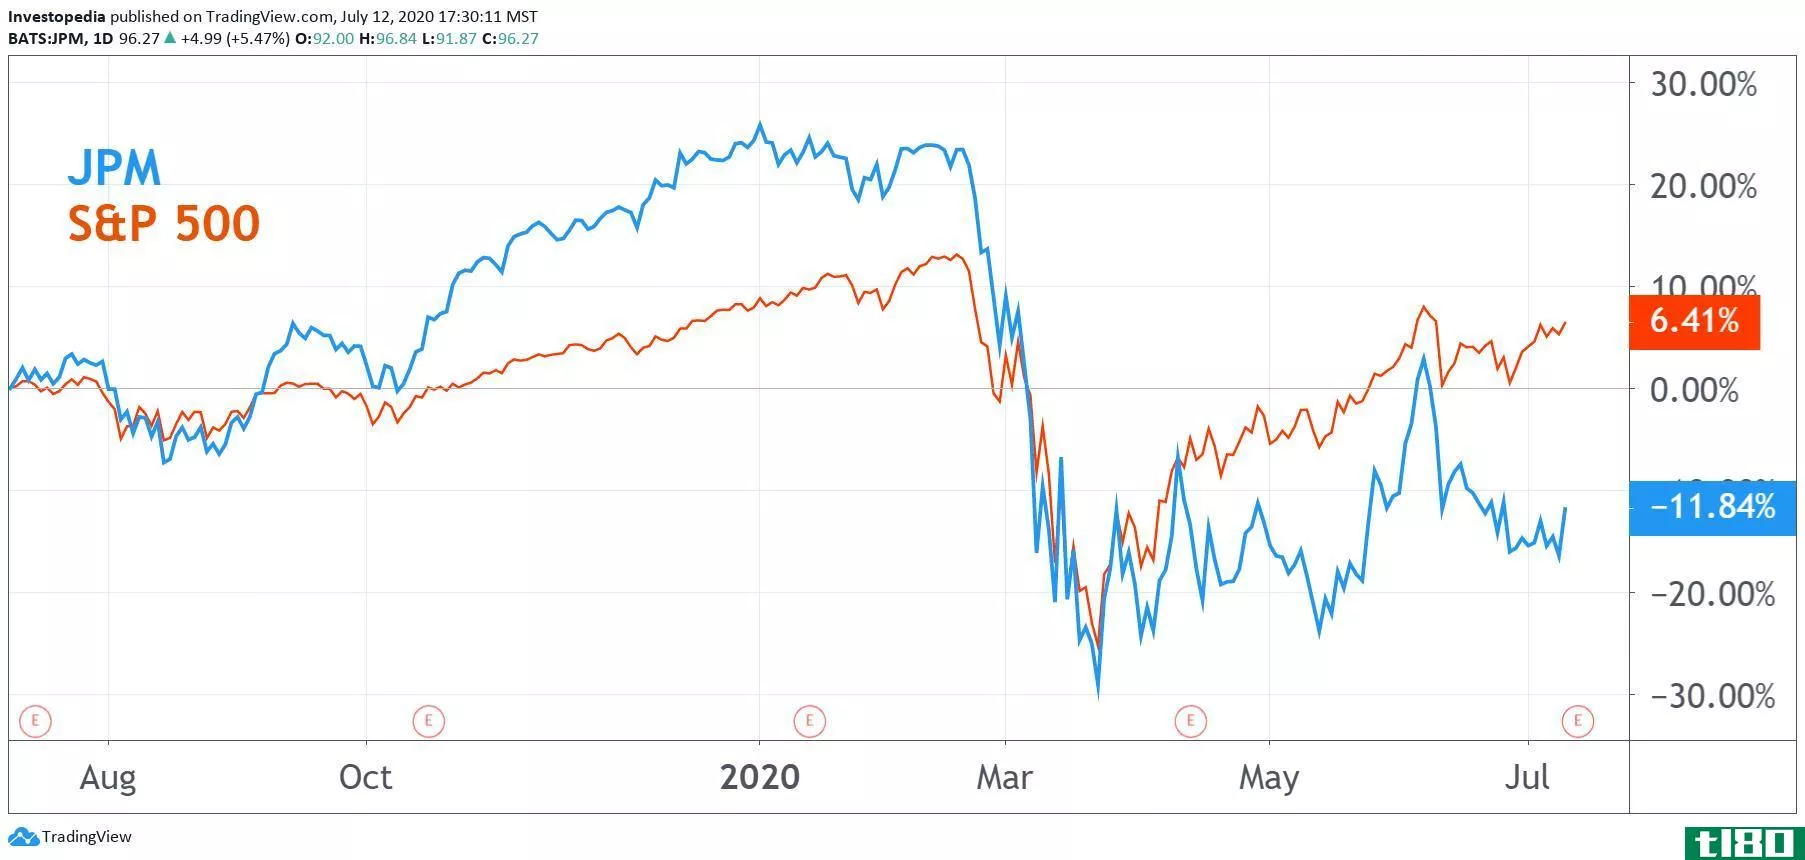 JPM vs. S&P 500 1-Year Performance